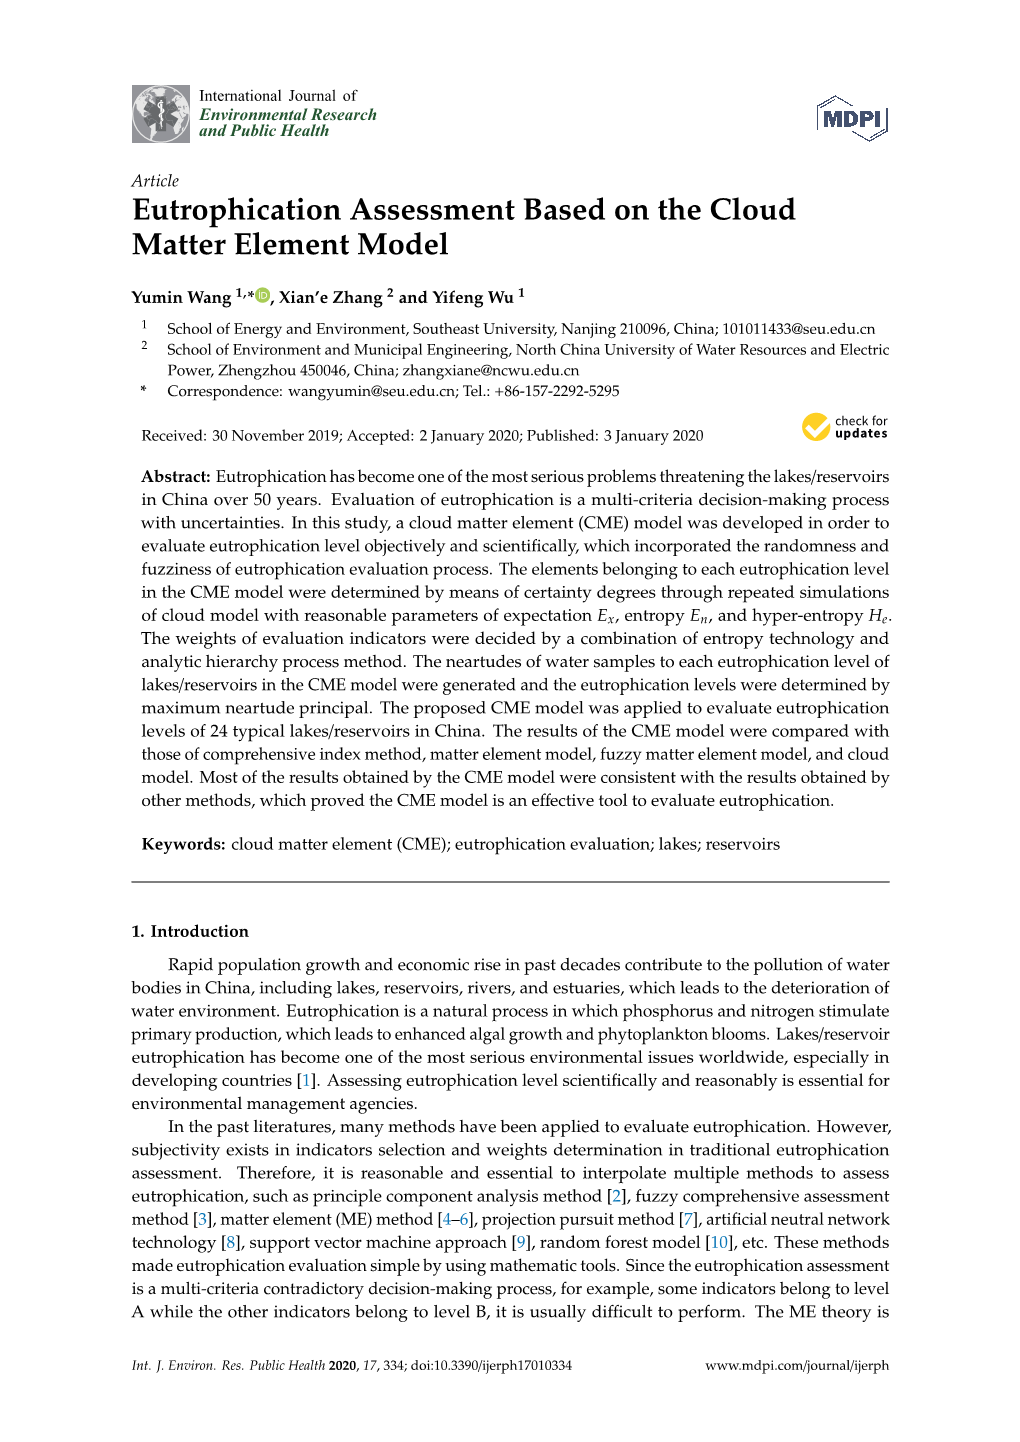 Eutrophication Assessment Based on the Cloud Matter Element Model